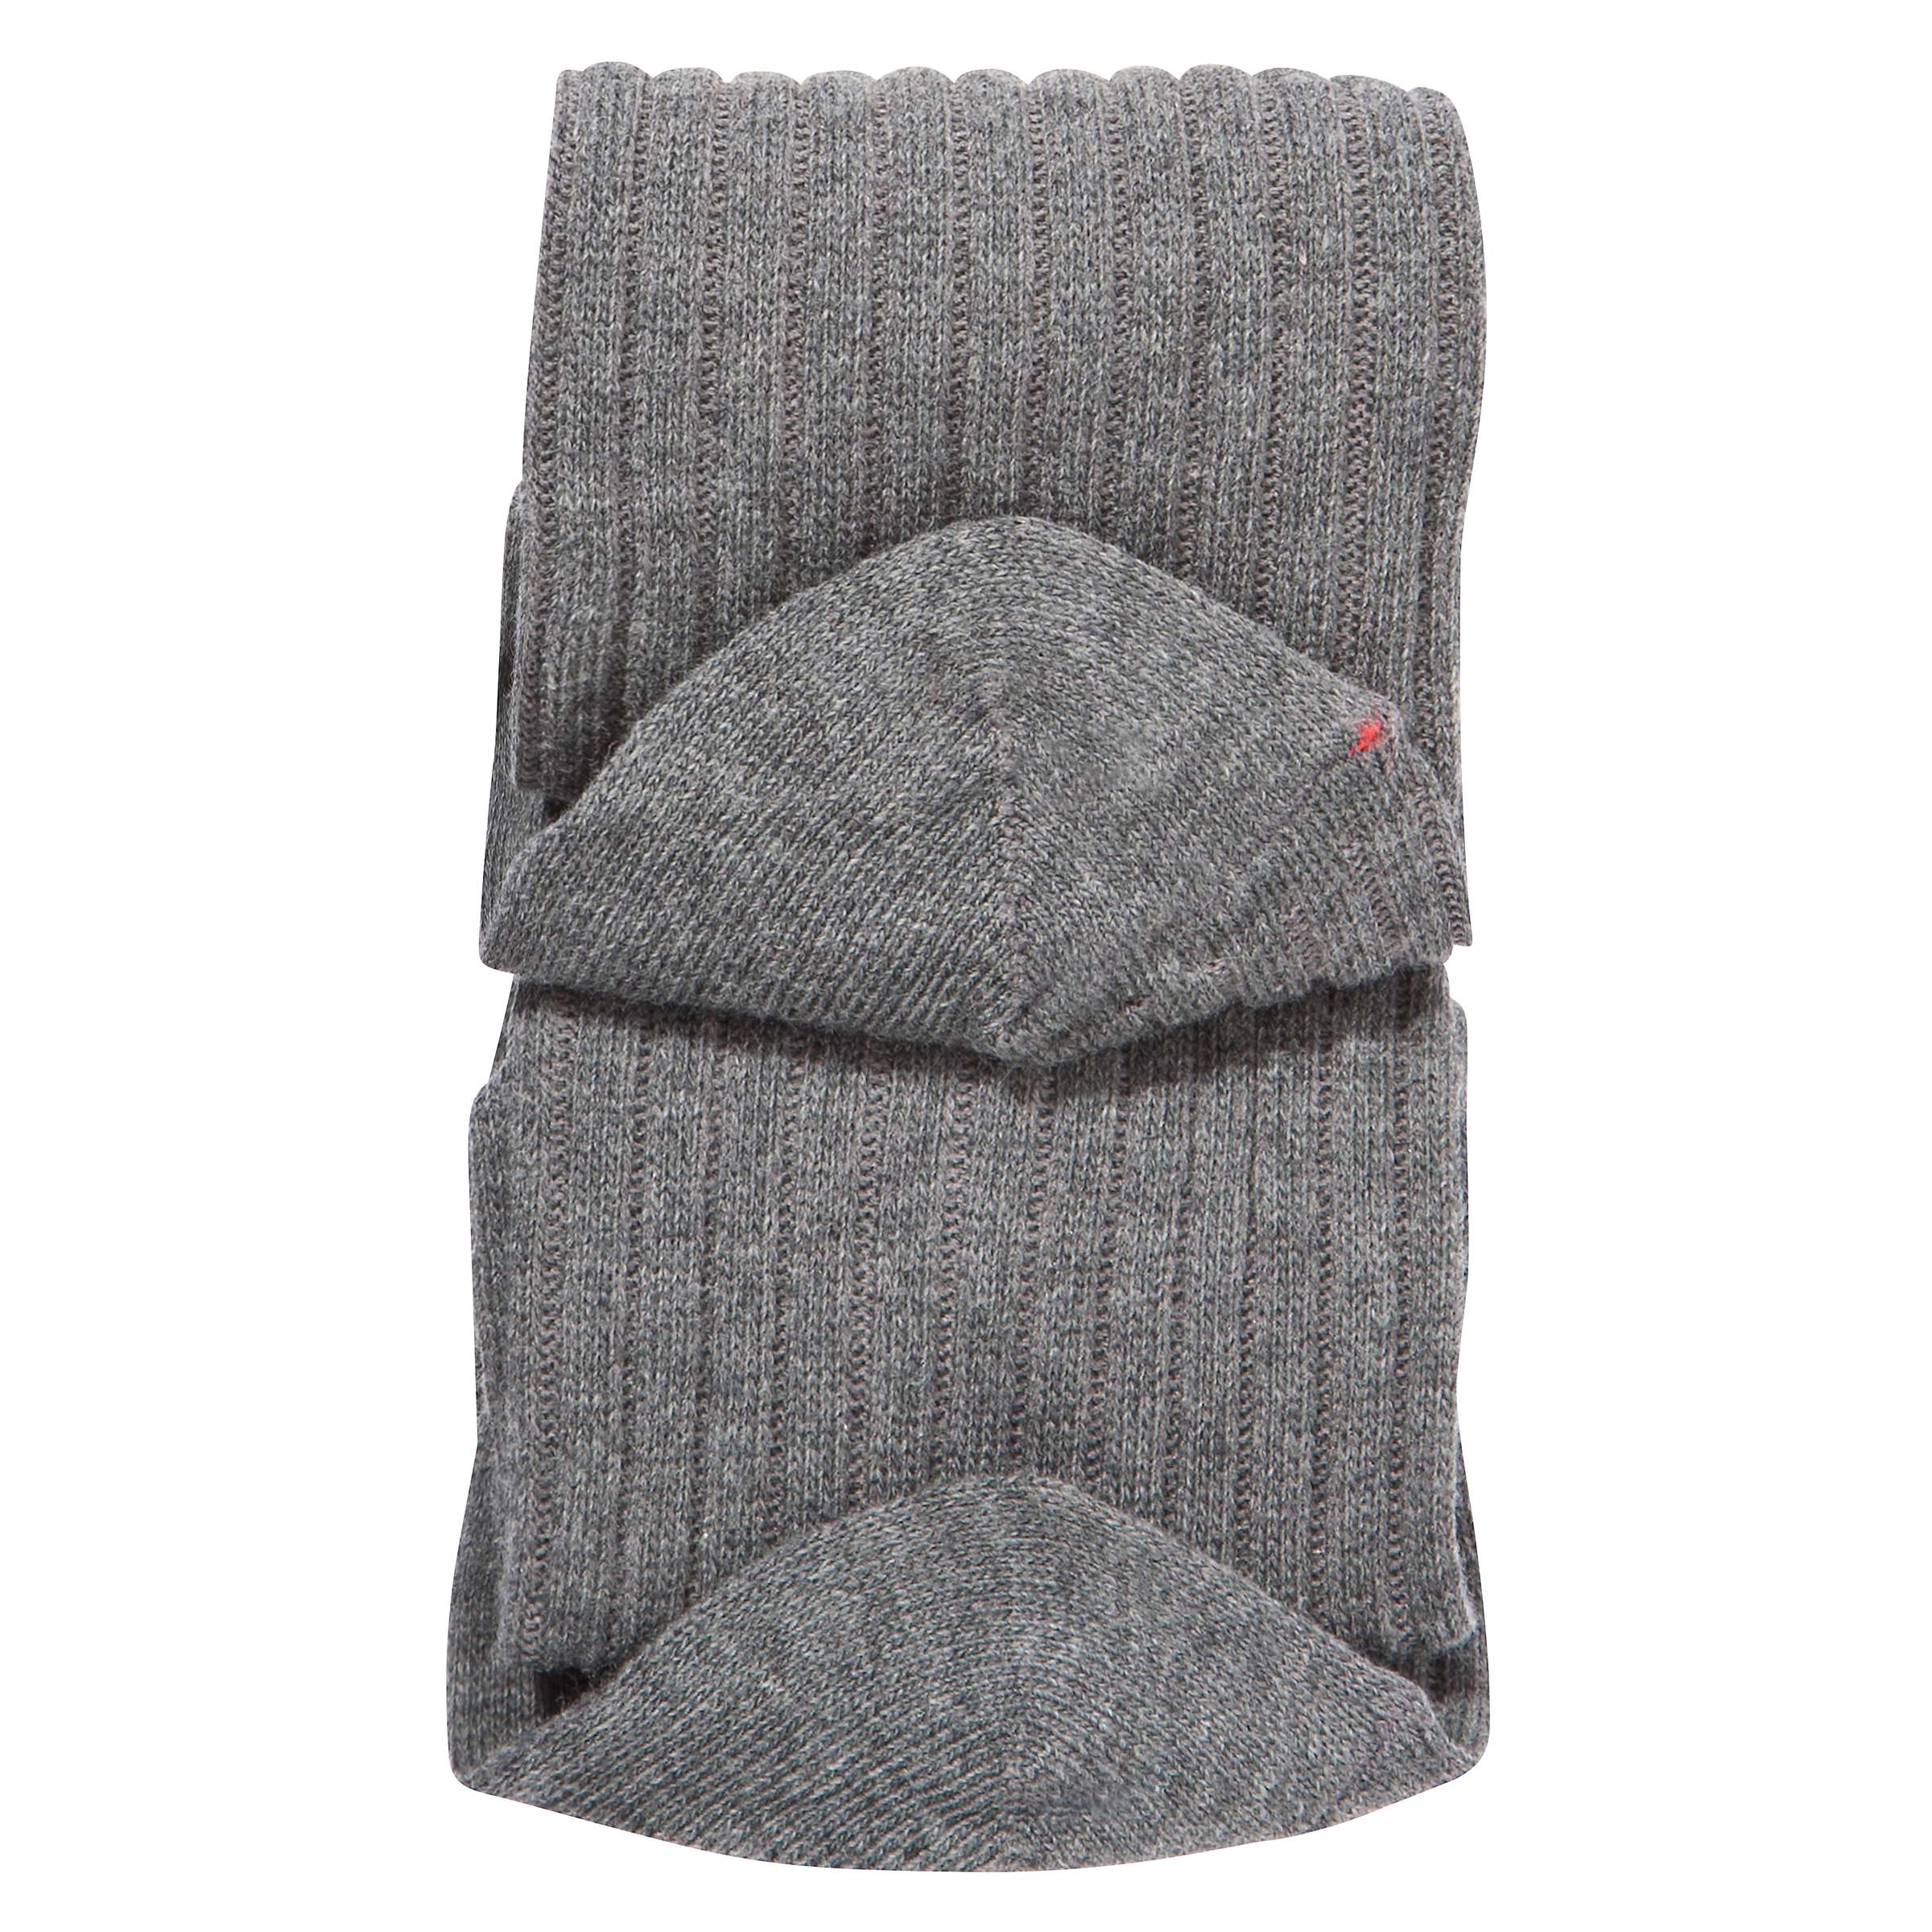 Buy The Prebendal School Socks, Pack of 2, Grey/Red Online at johnlewis.com